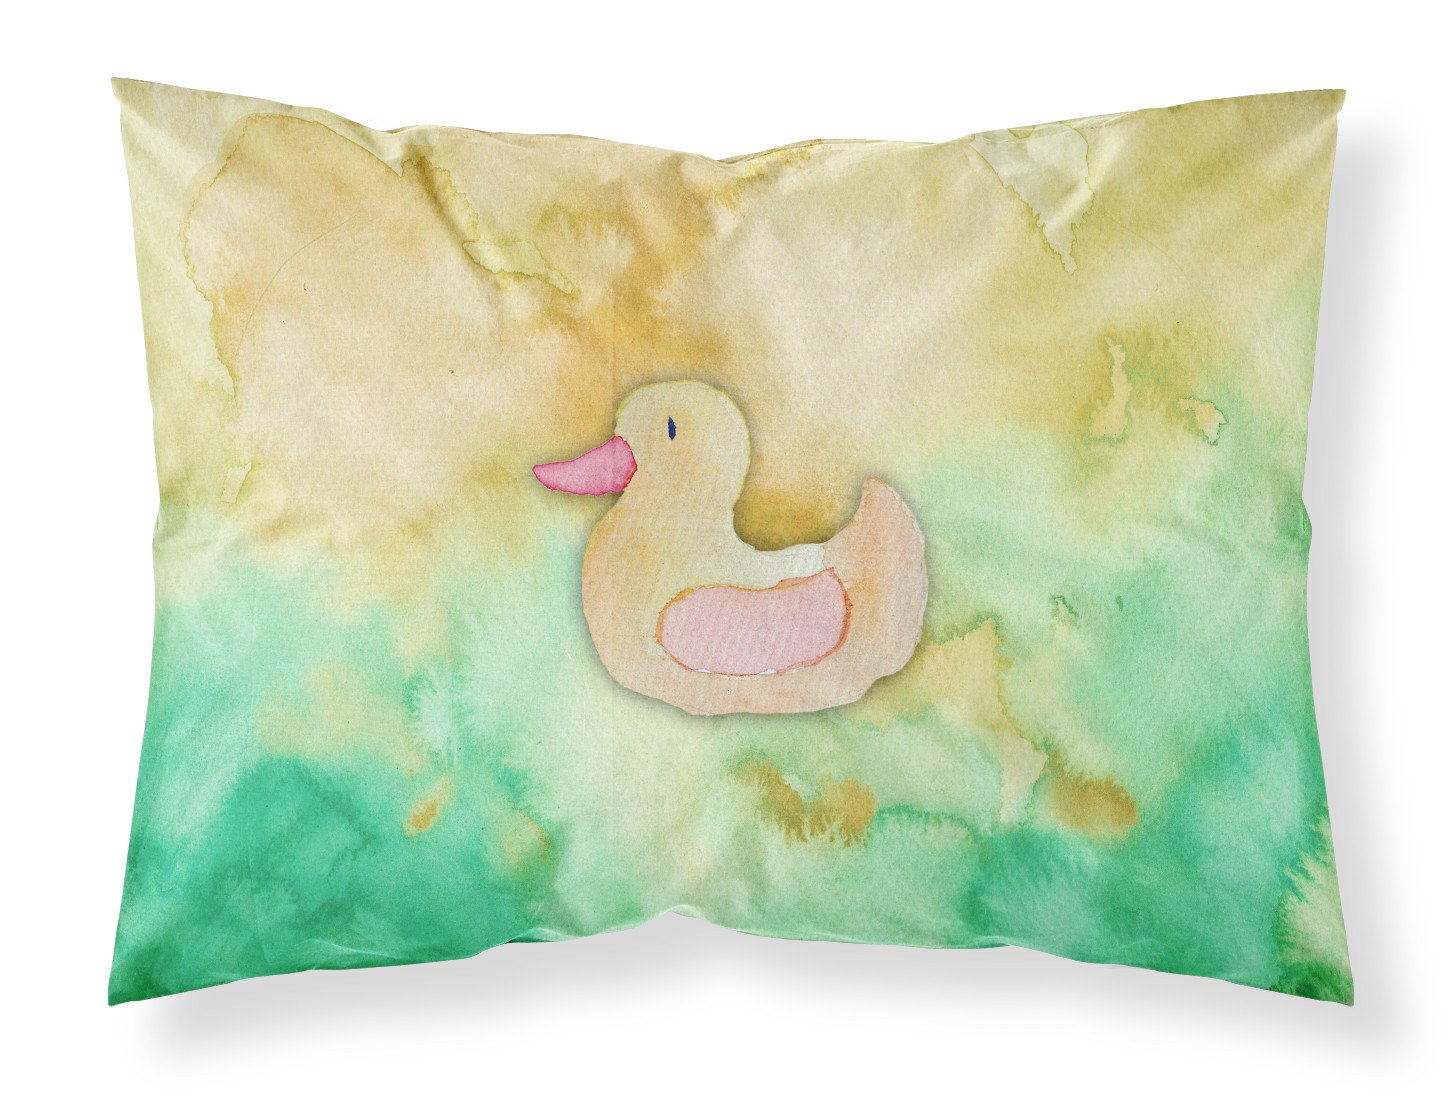 Rubber Duckie Watercolor Fabric Standard Pillowcase BB7351PILLOWCASE by Caroline's Treasures